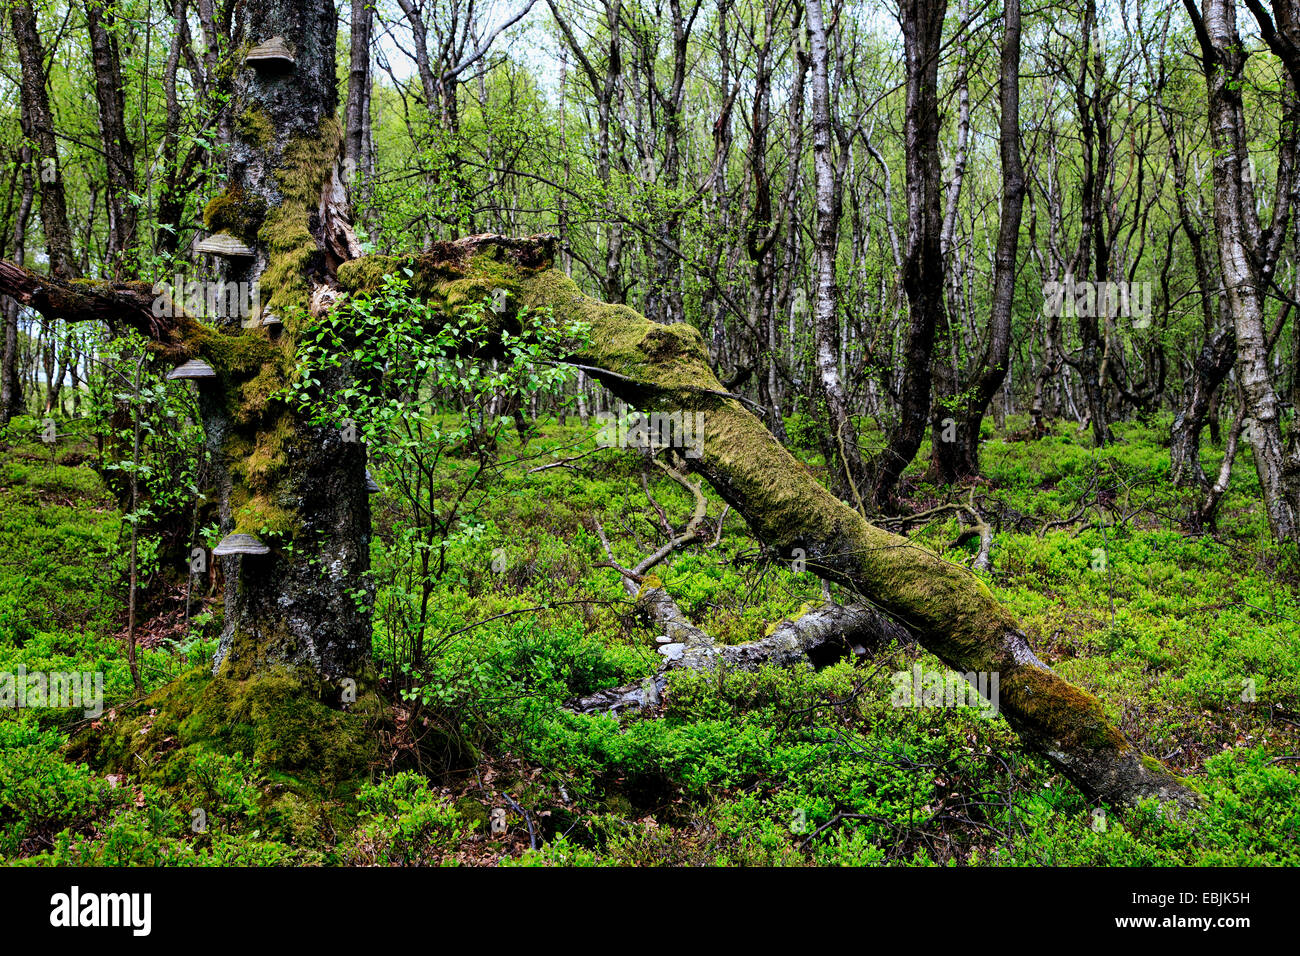 Carpathian trees (Betula carpatica), wood, Germany, Rhineland-Palatinate Stock Photo